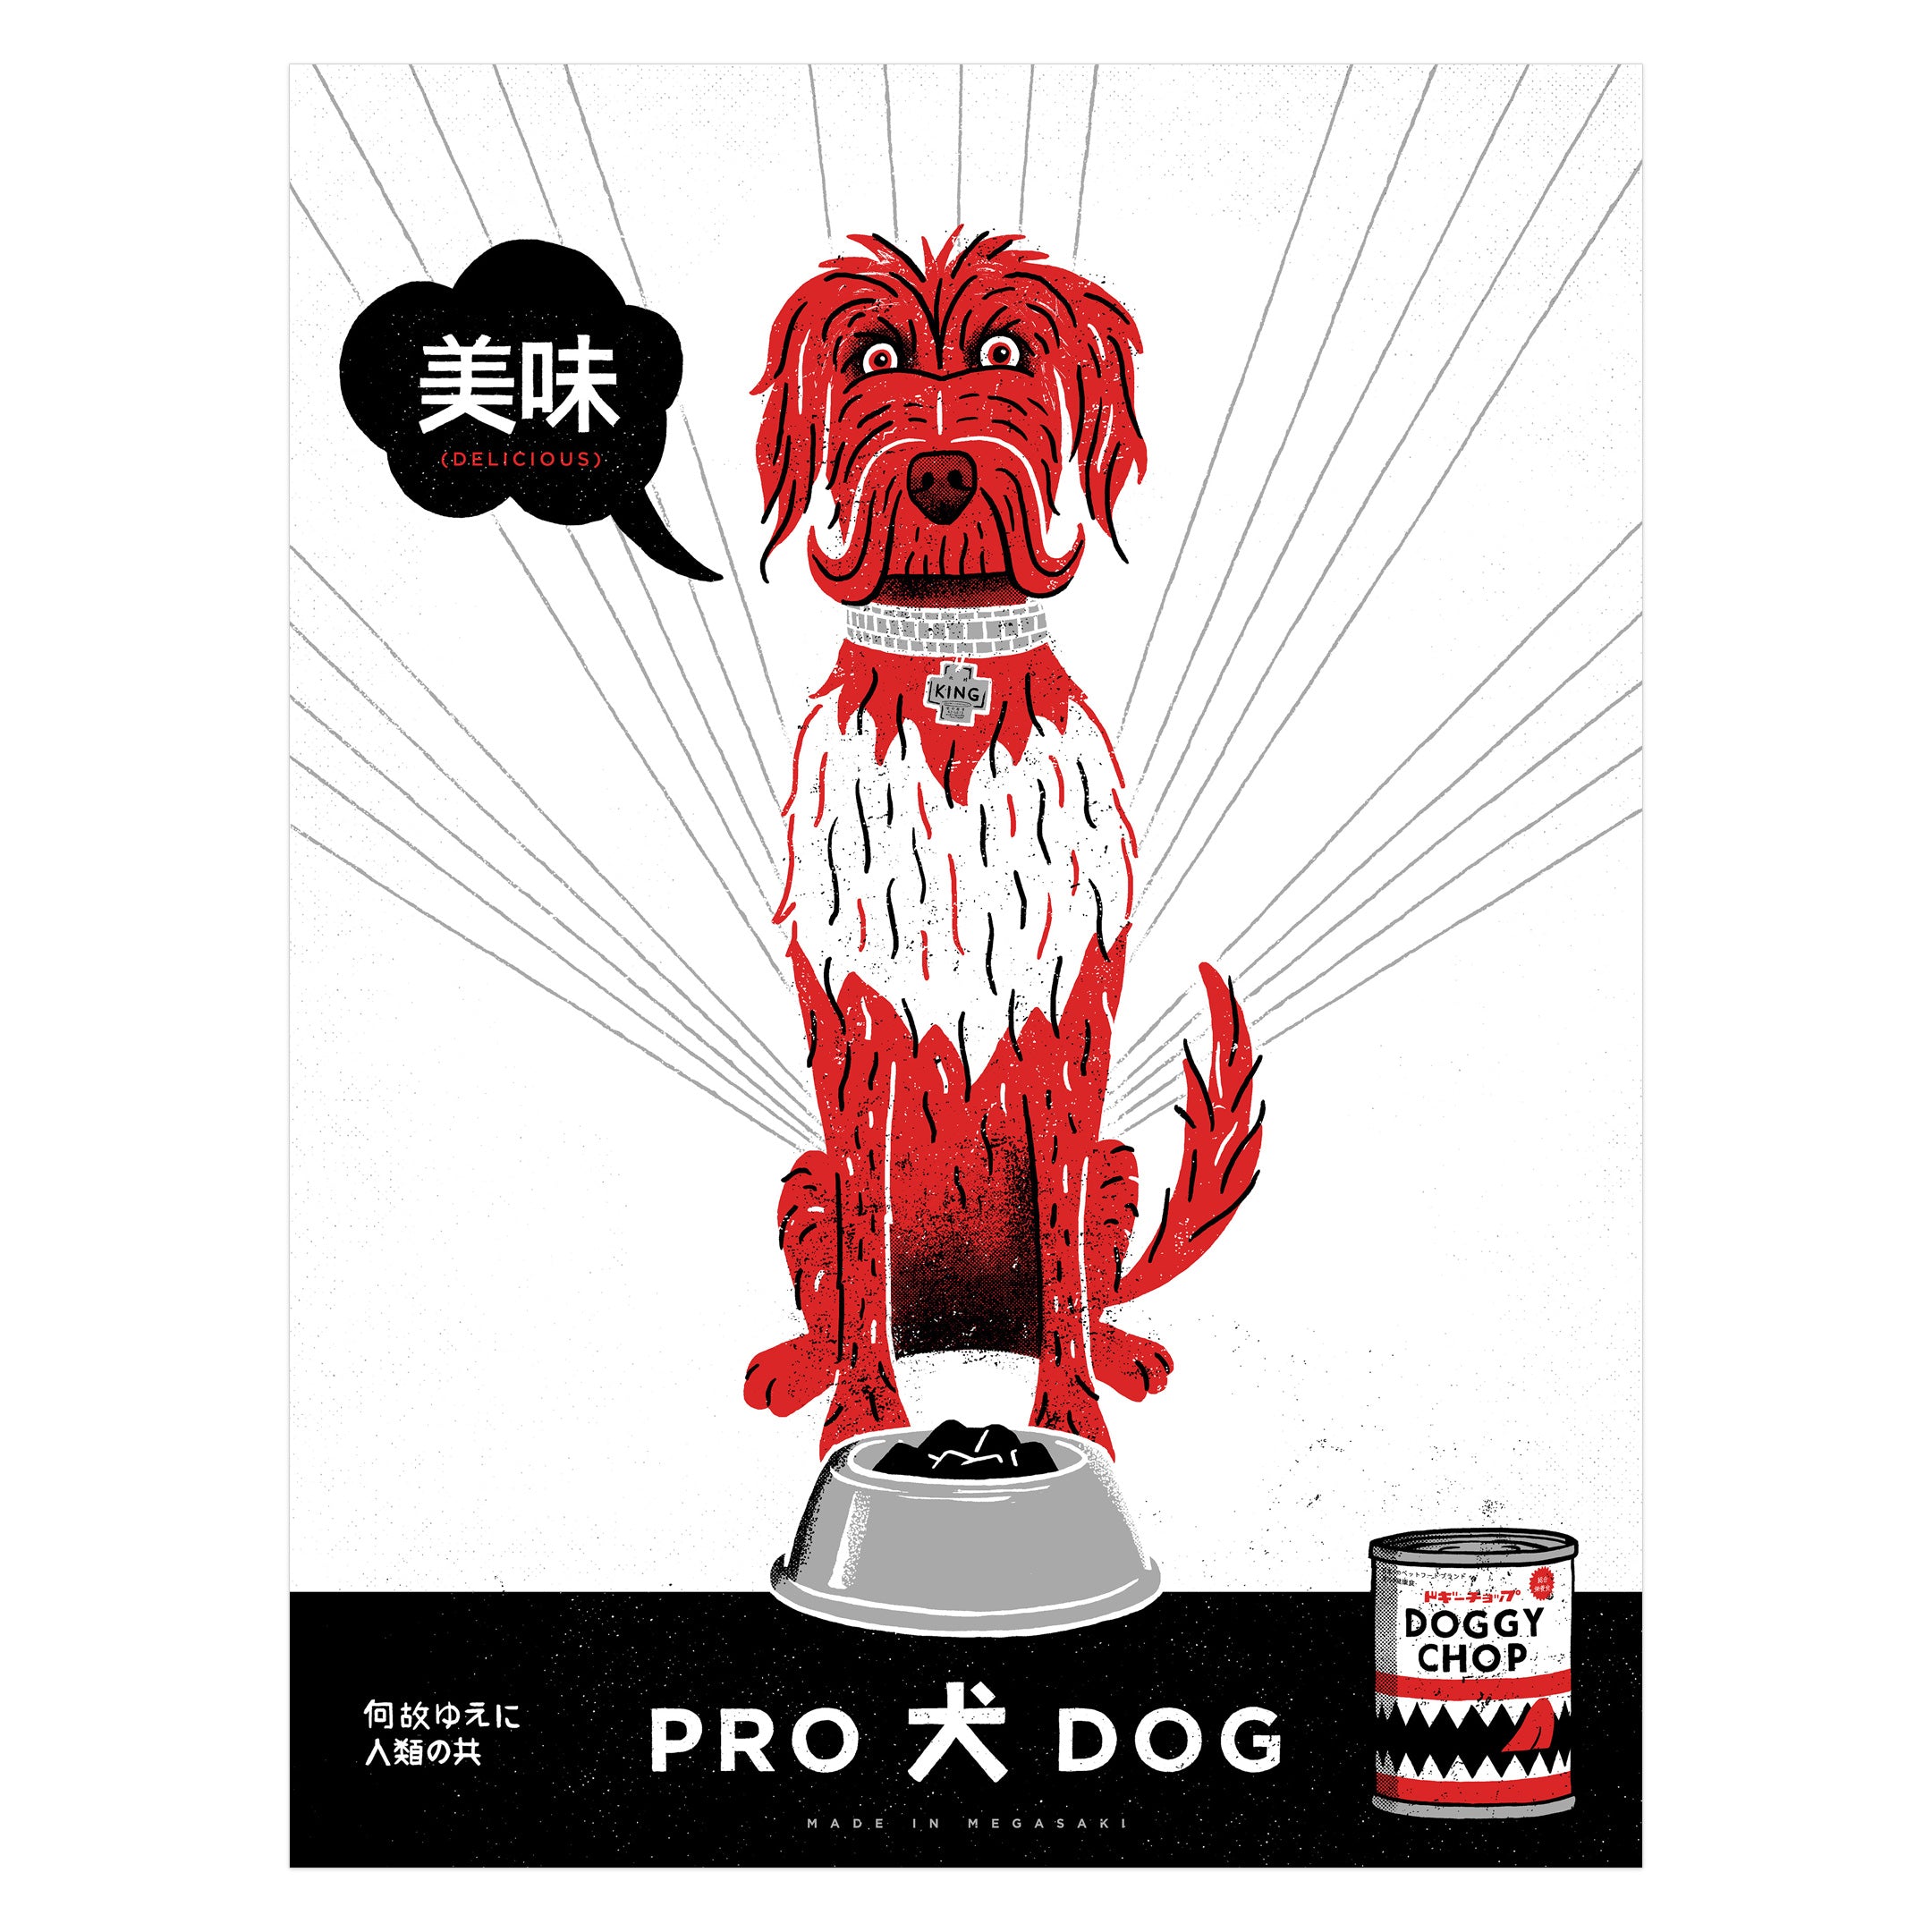 Doggy Chop Art Print